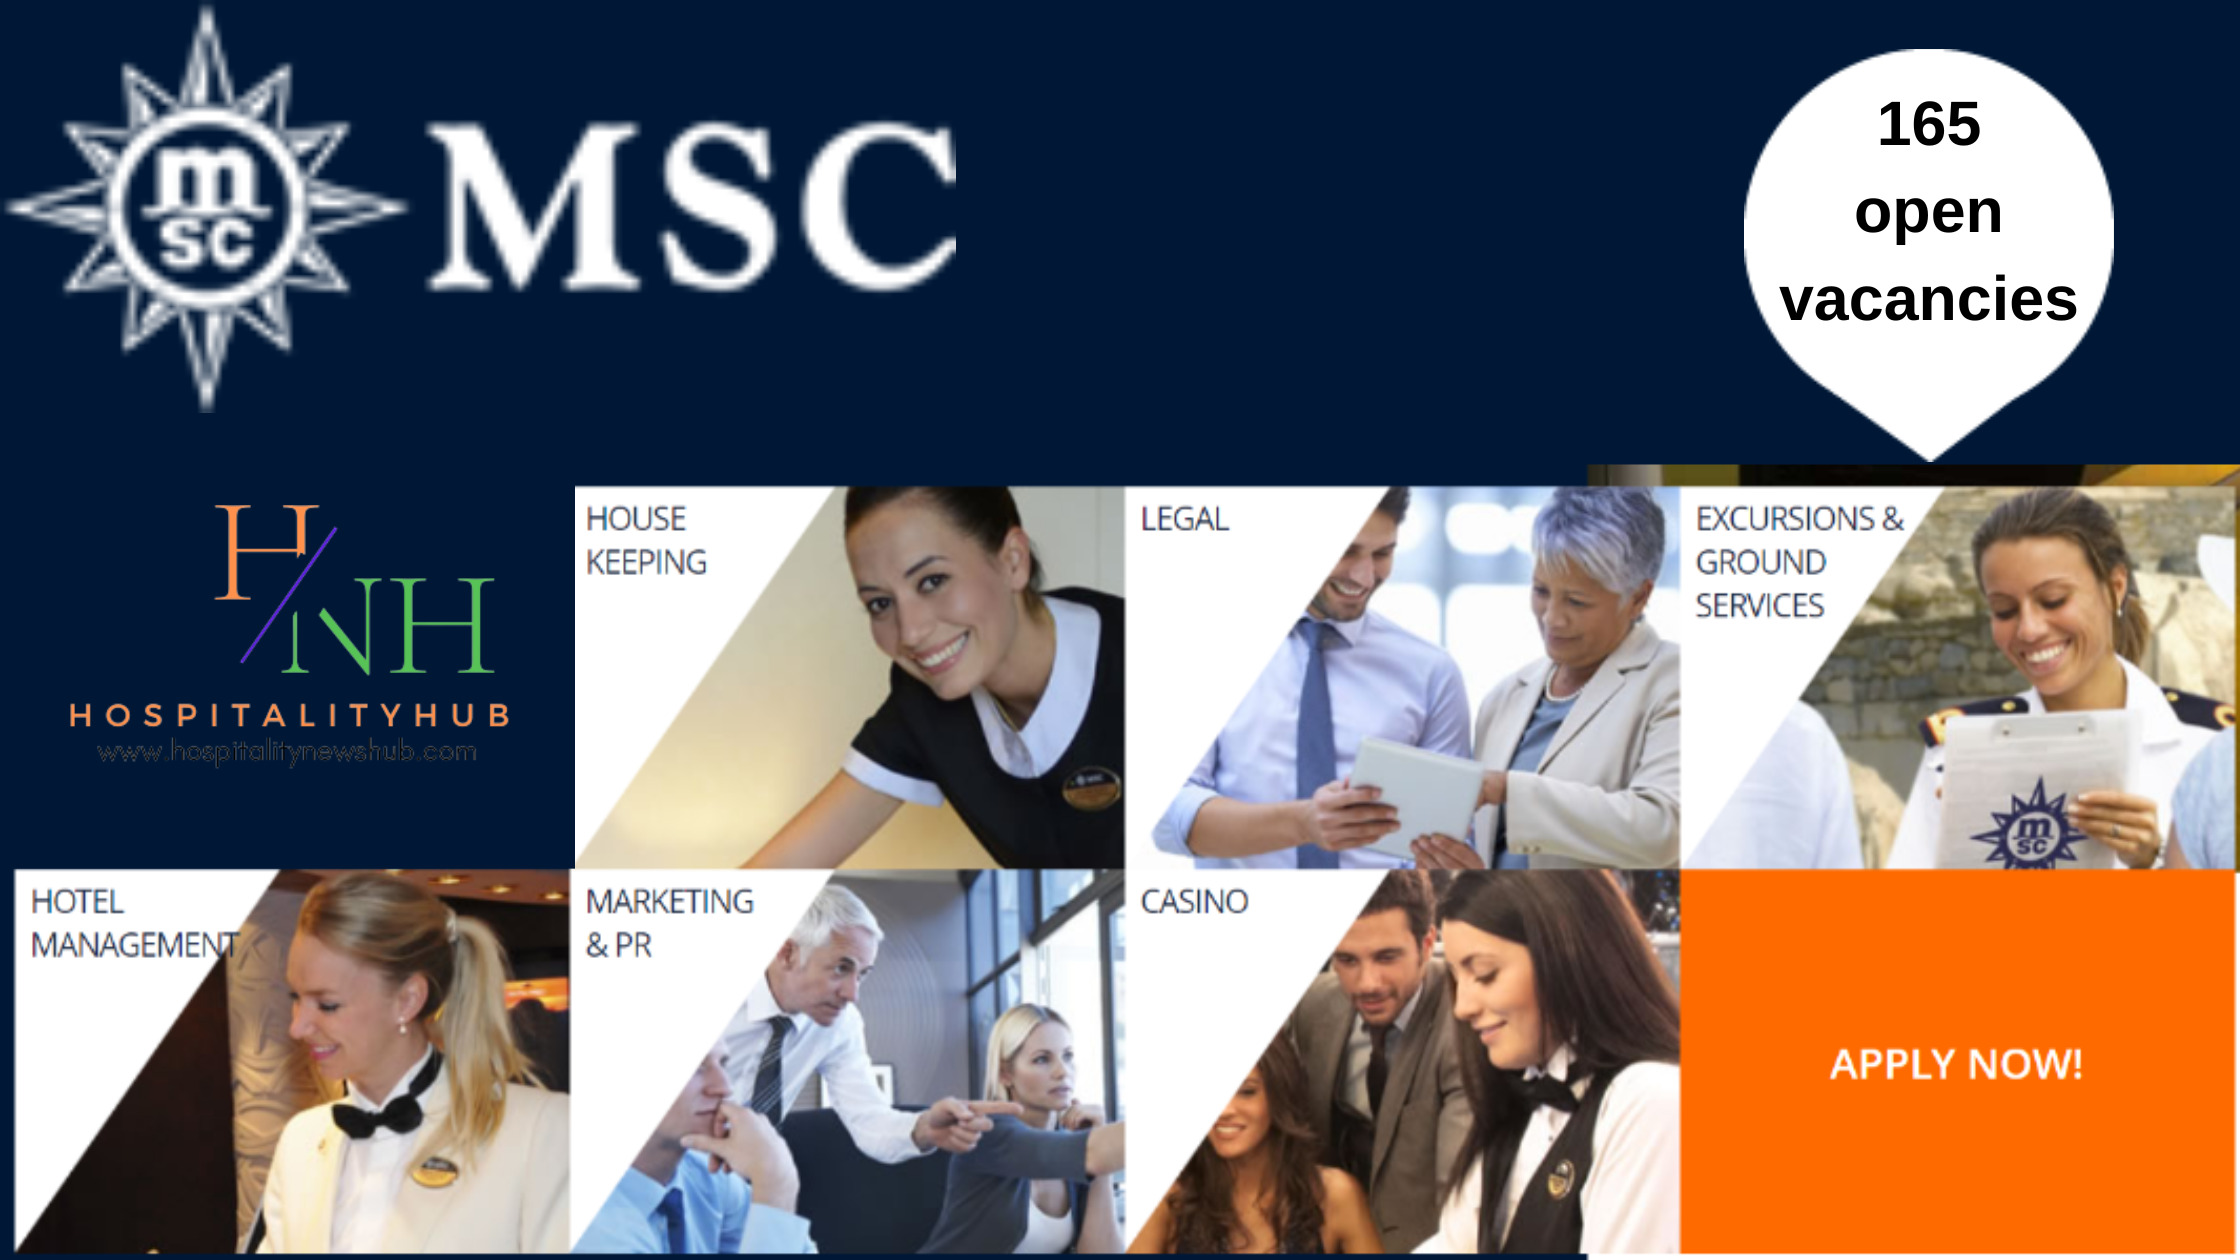 msc cruises employment opportunities